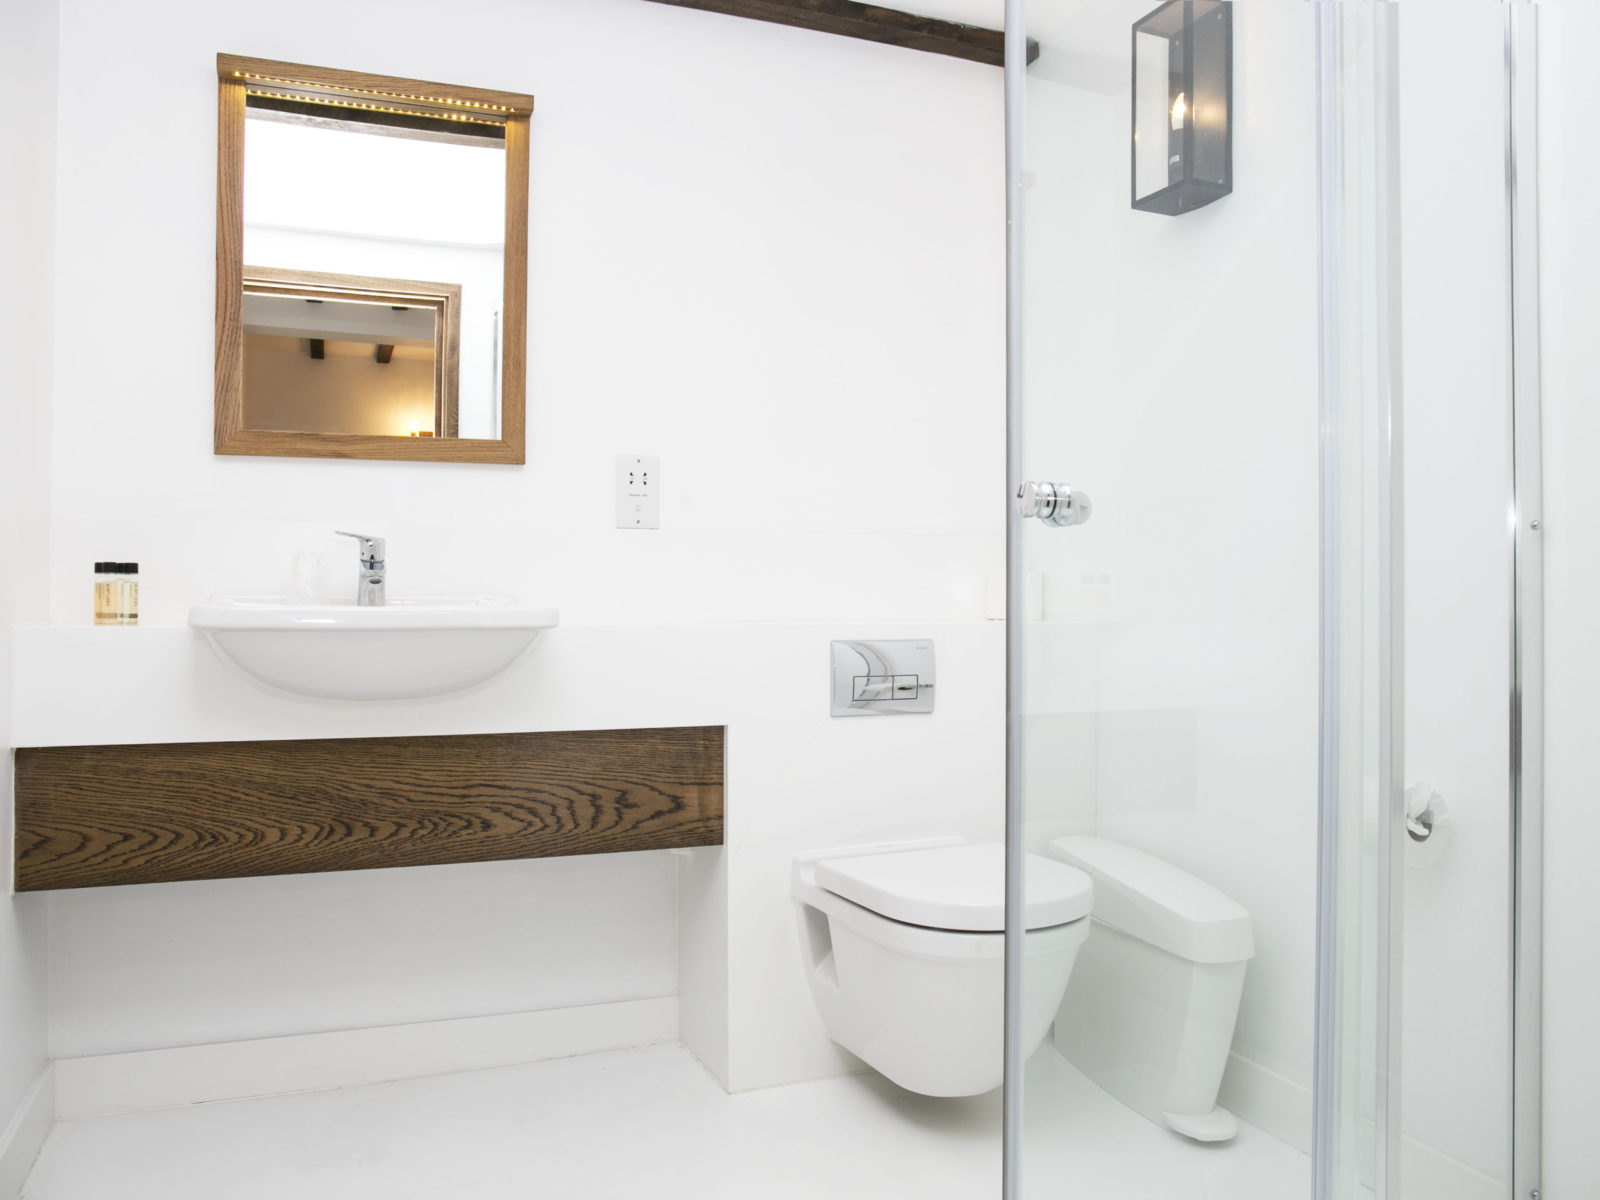 Bury Lodge hotel bespoke bathroom vanity unit